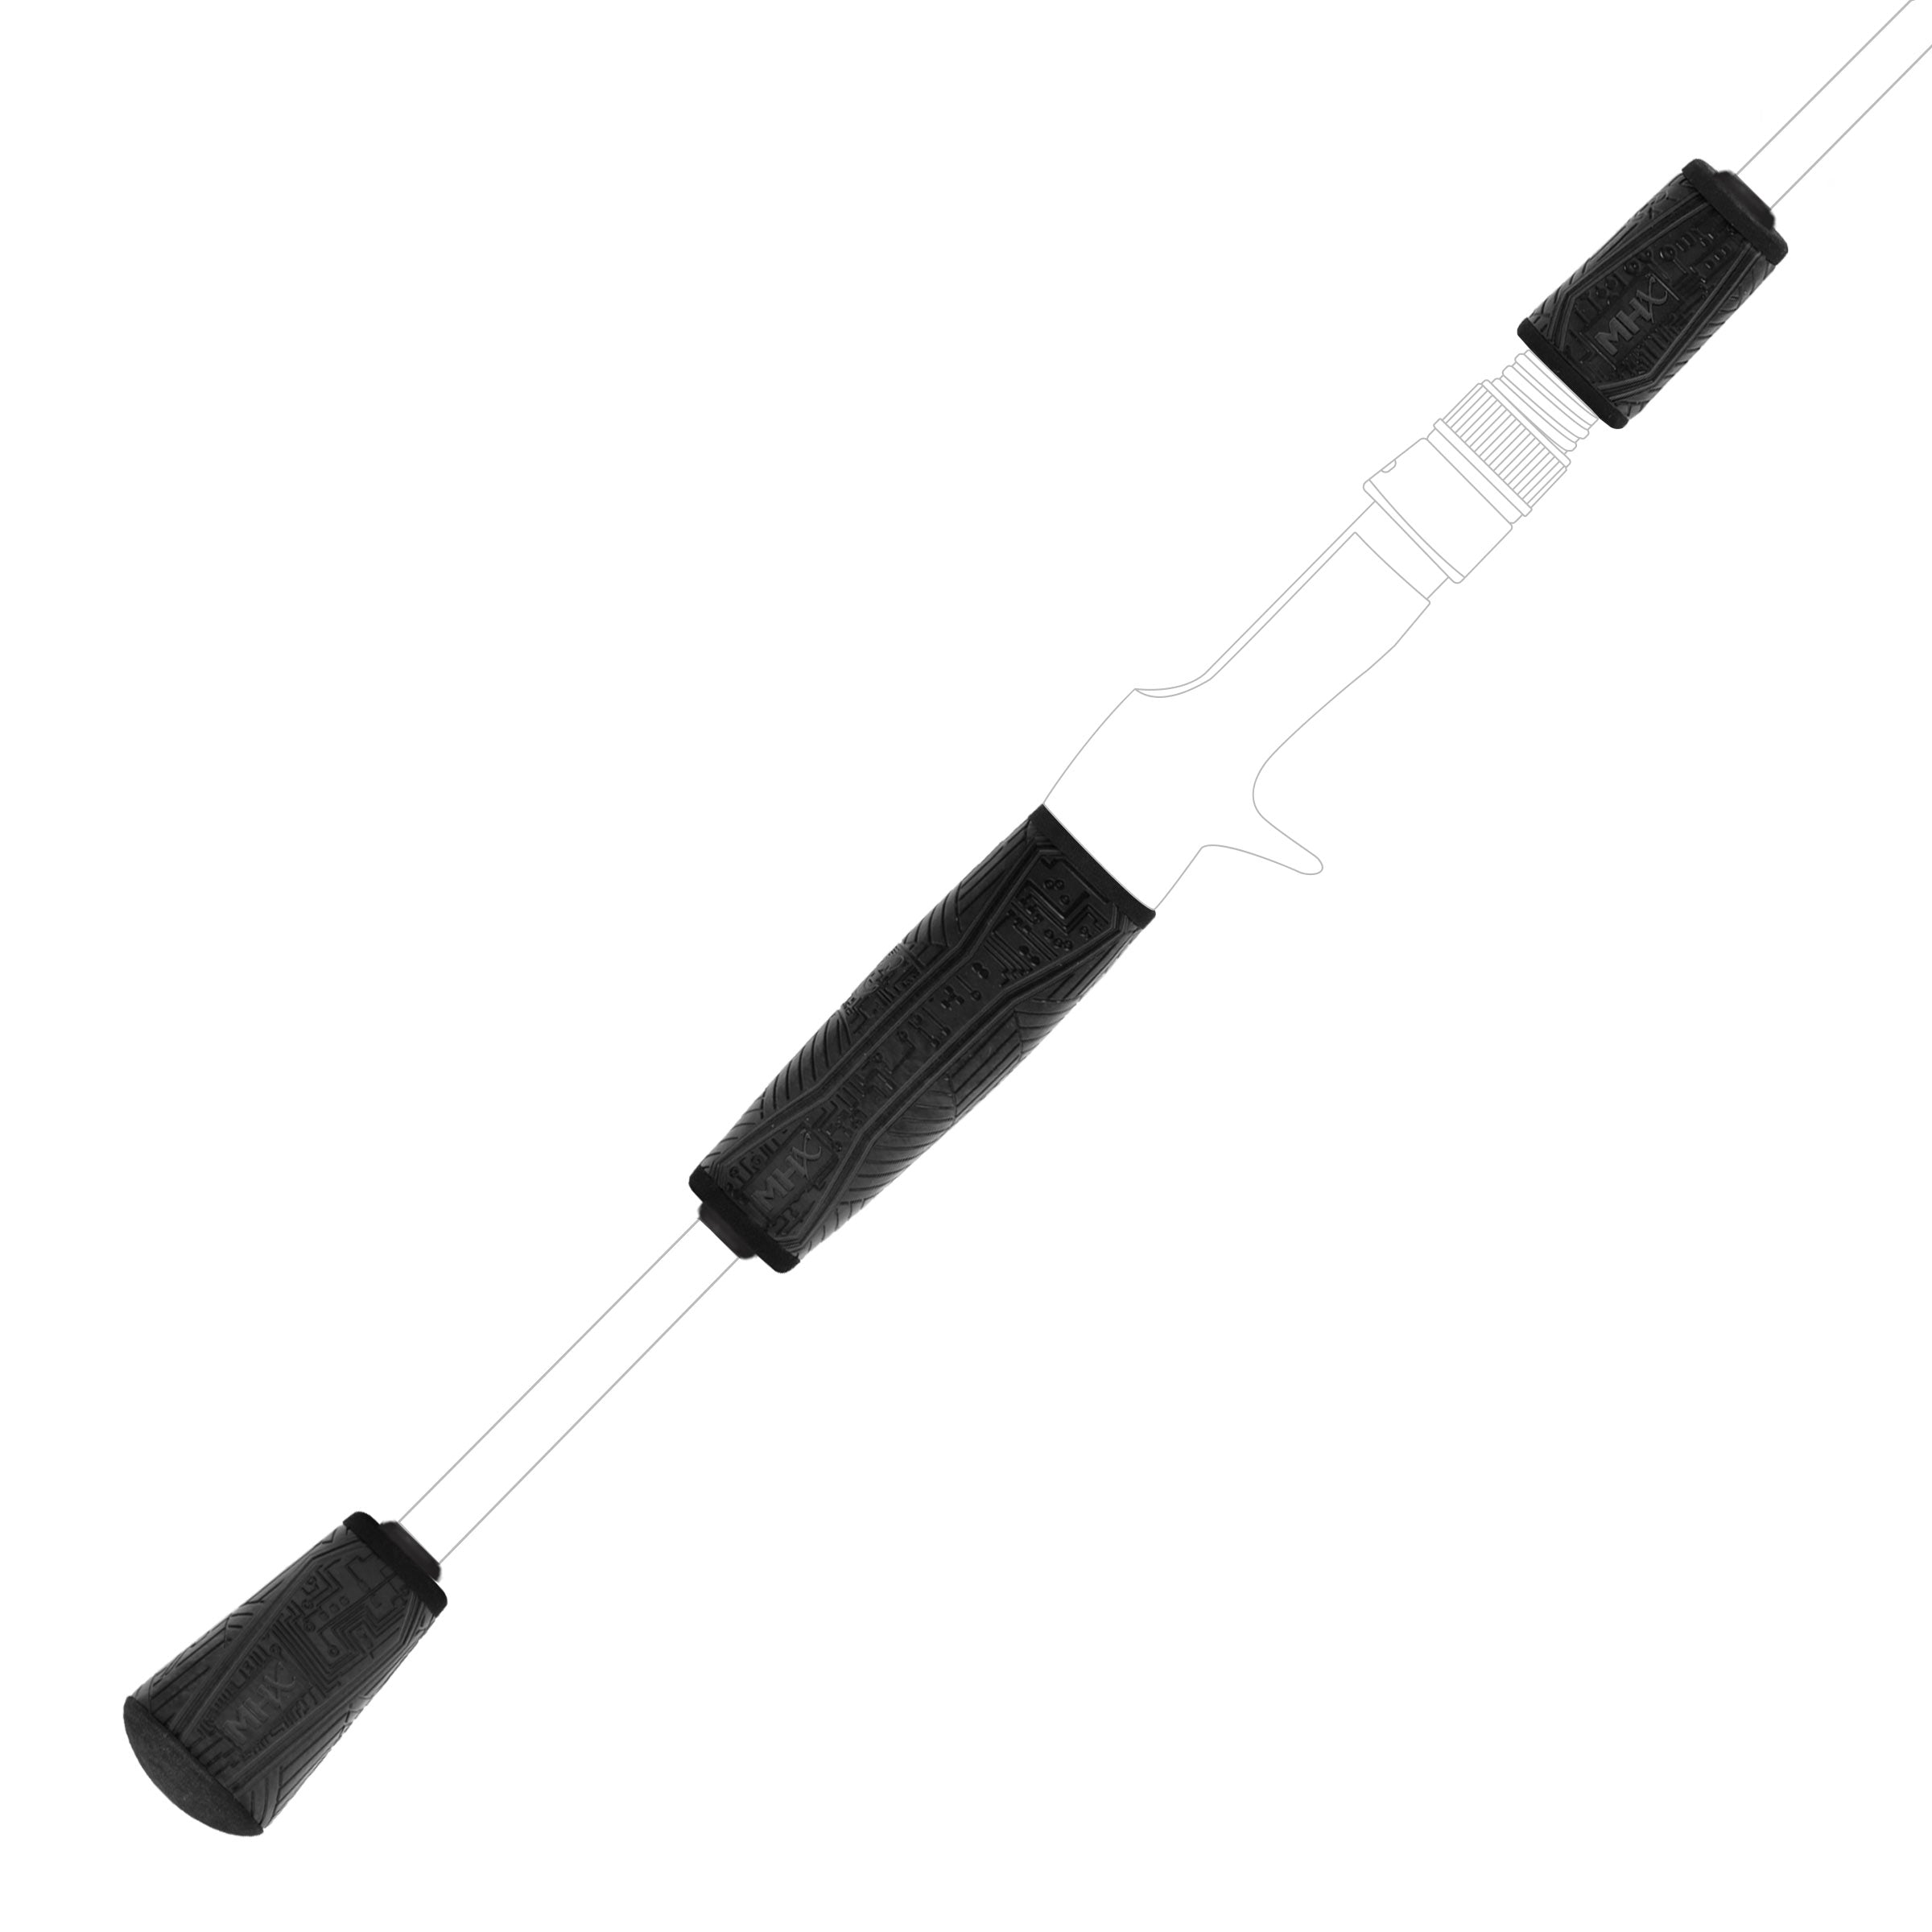 MHX Winn Split Grip Kits for Casting Rods MHX Winndry Black & Green / 3.87 in. Rear | 1.75 in. Fore